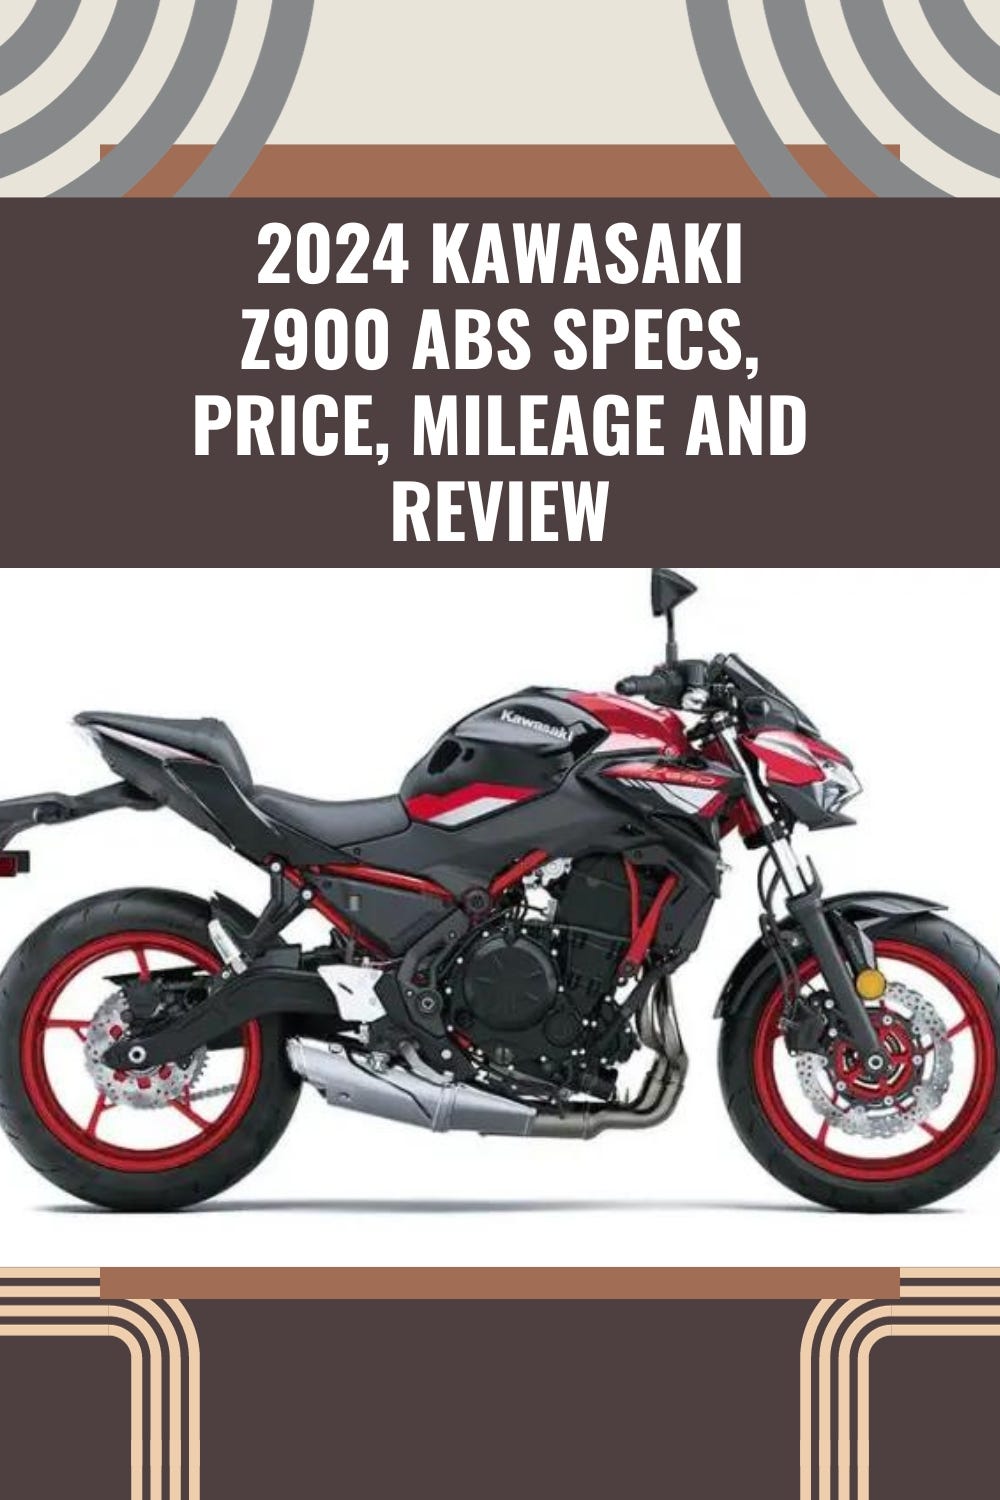 2023 Kawasaki Z900: Performance, Price, And Photos